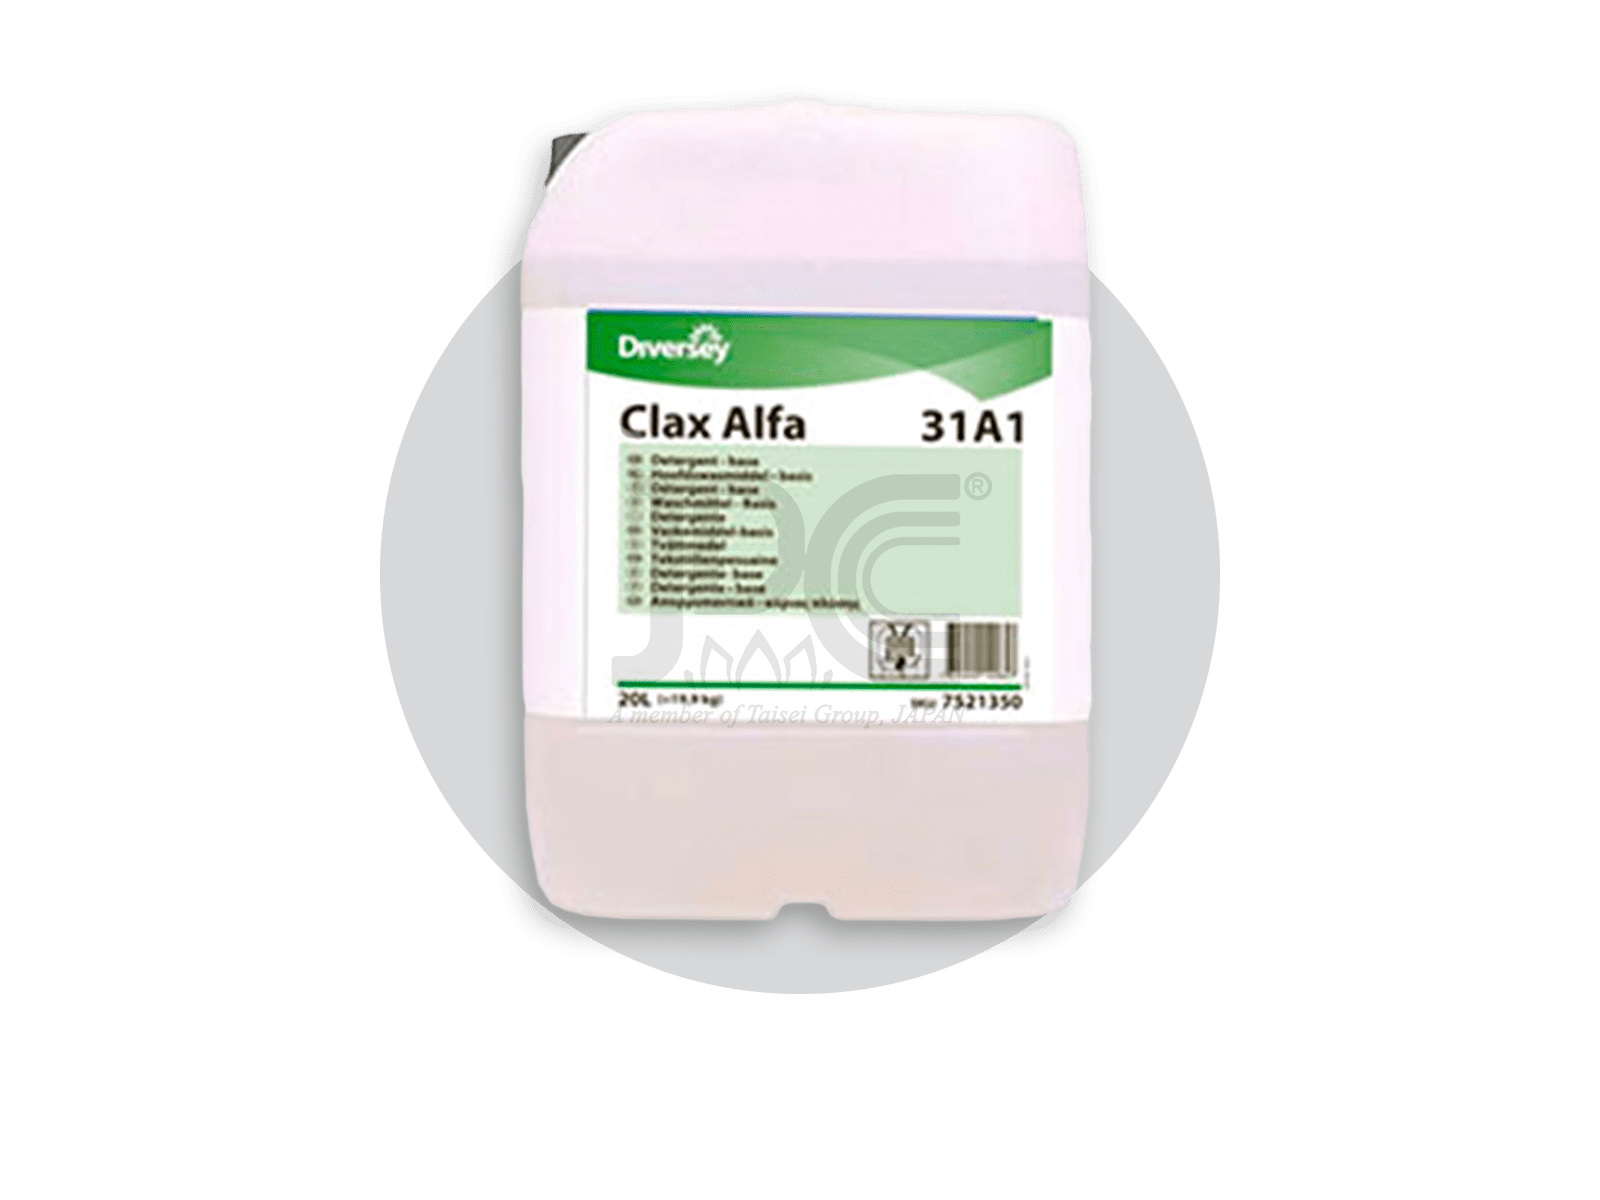 CLAX ALFA